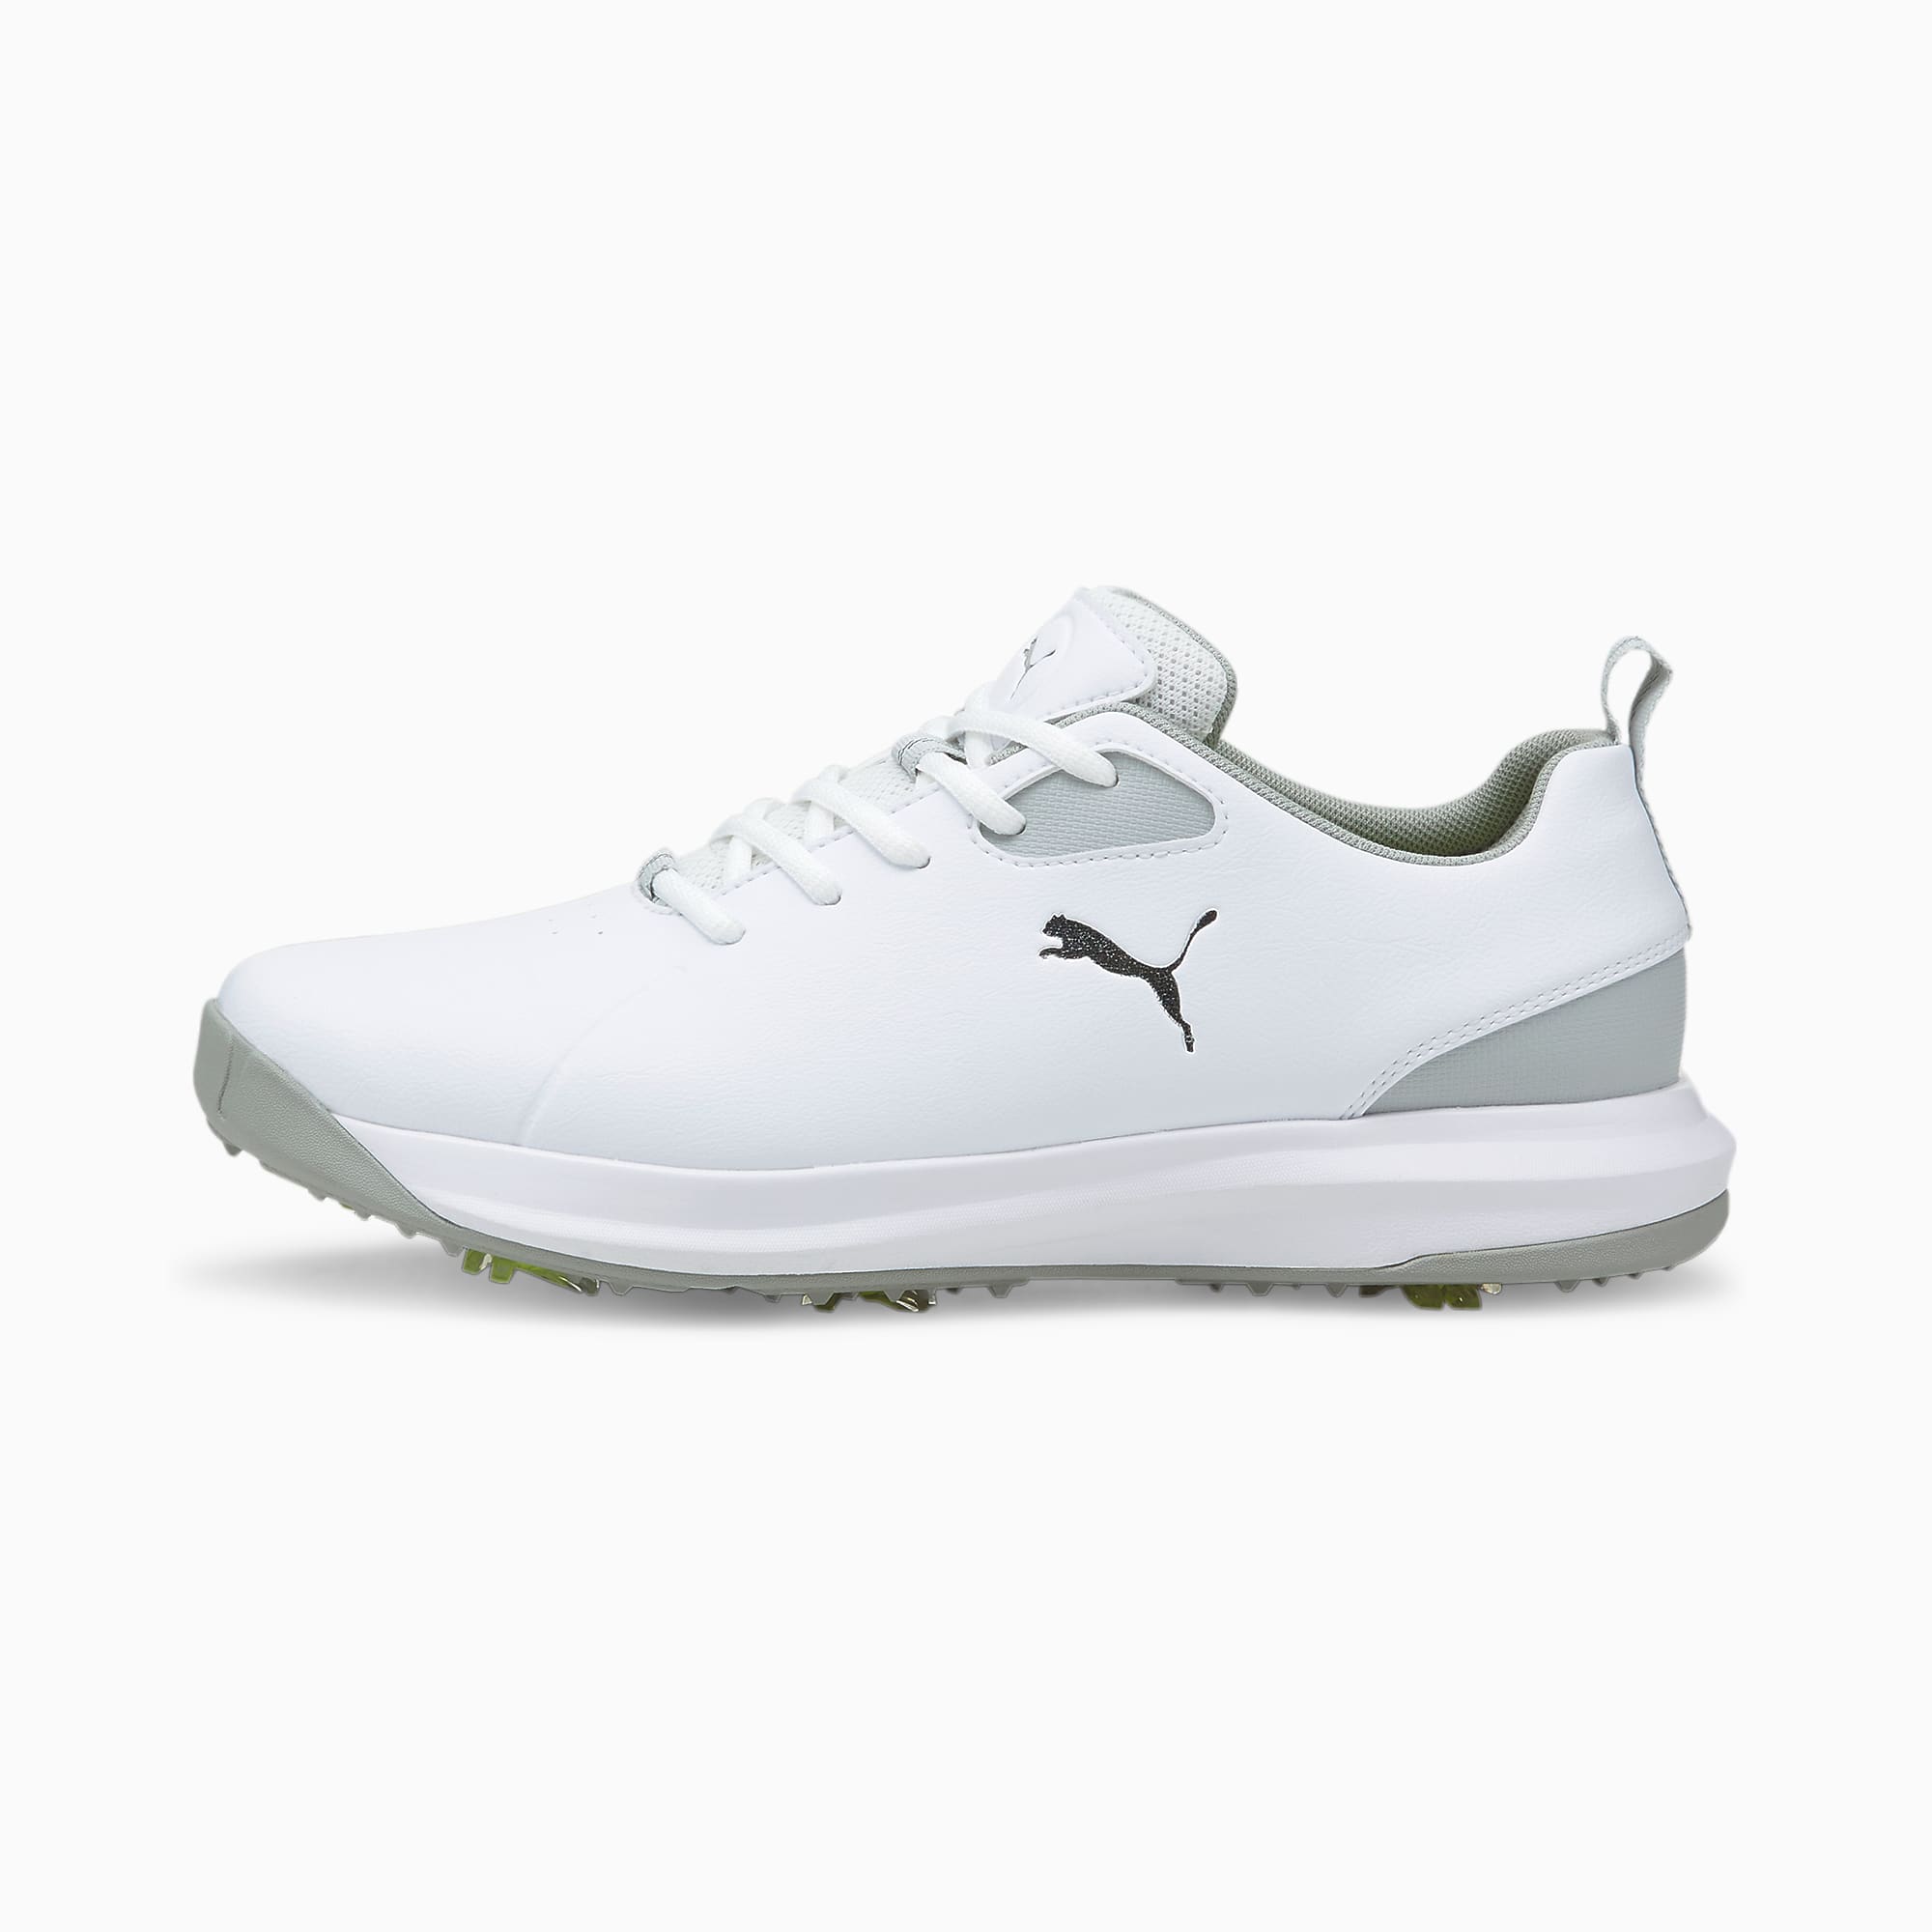 Calzado de golf hombre FUSION FX Tech | gray | PUMA